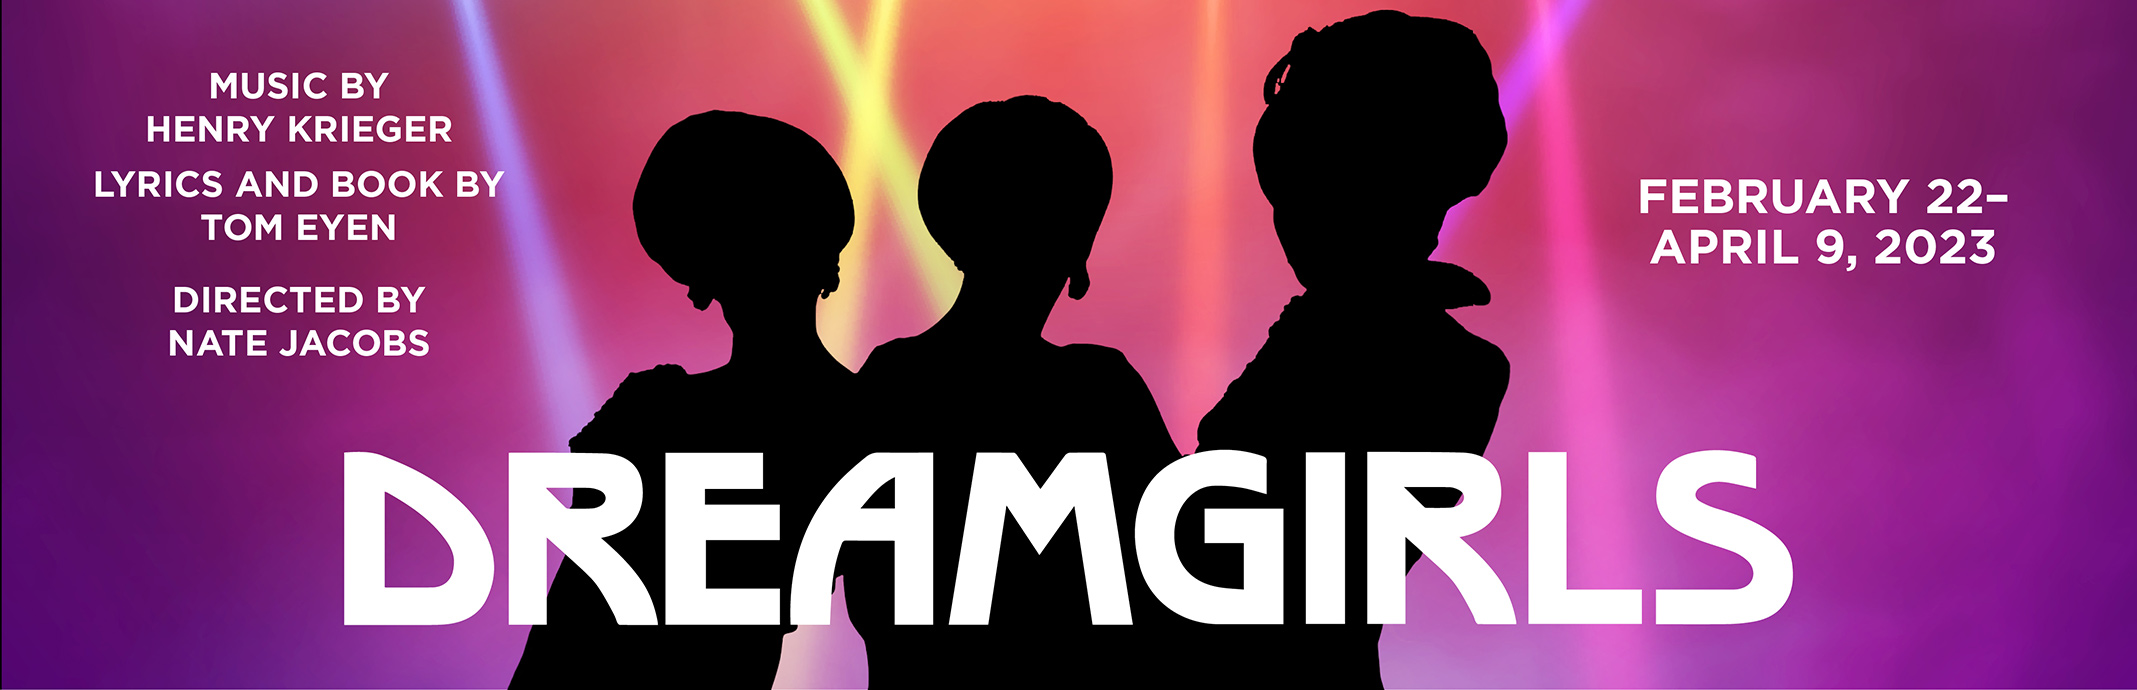 Dreamgirls: FEBRUARY 22 – APRIL 9, 2023